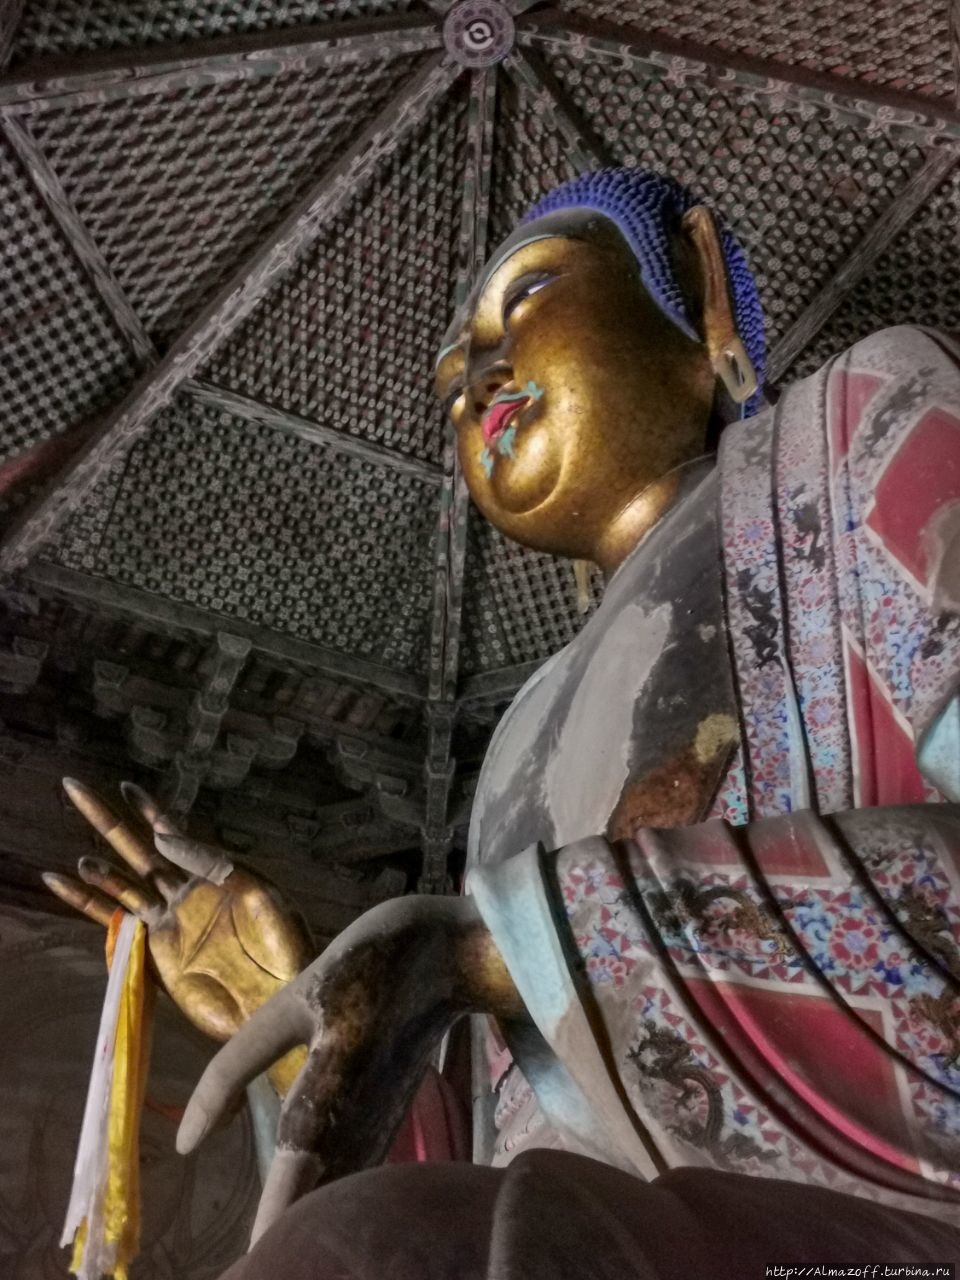 Пагода Будды Шакьямуни Инсянь, Китай